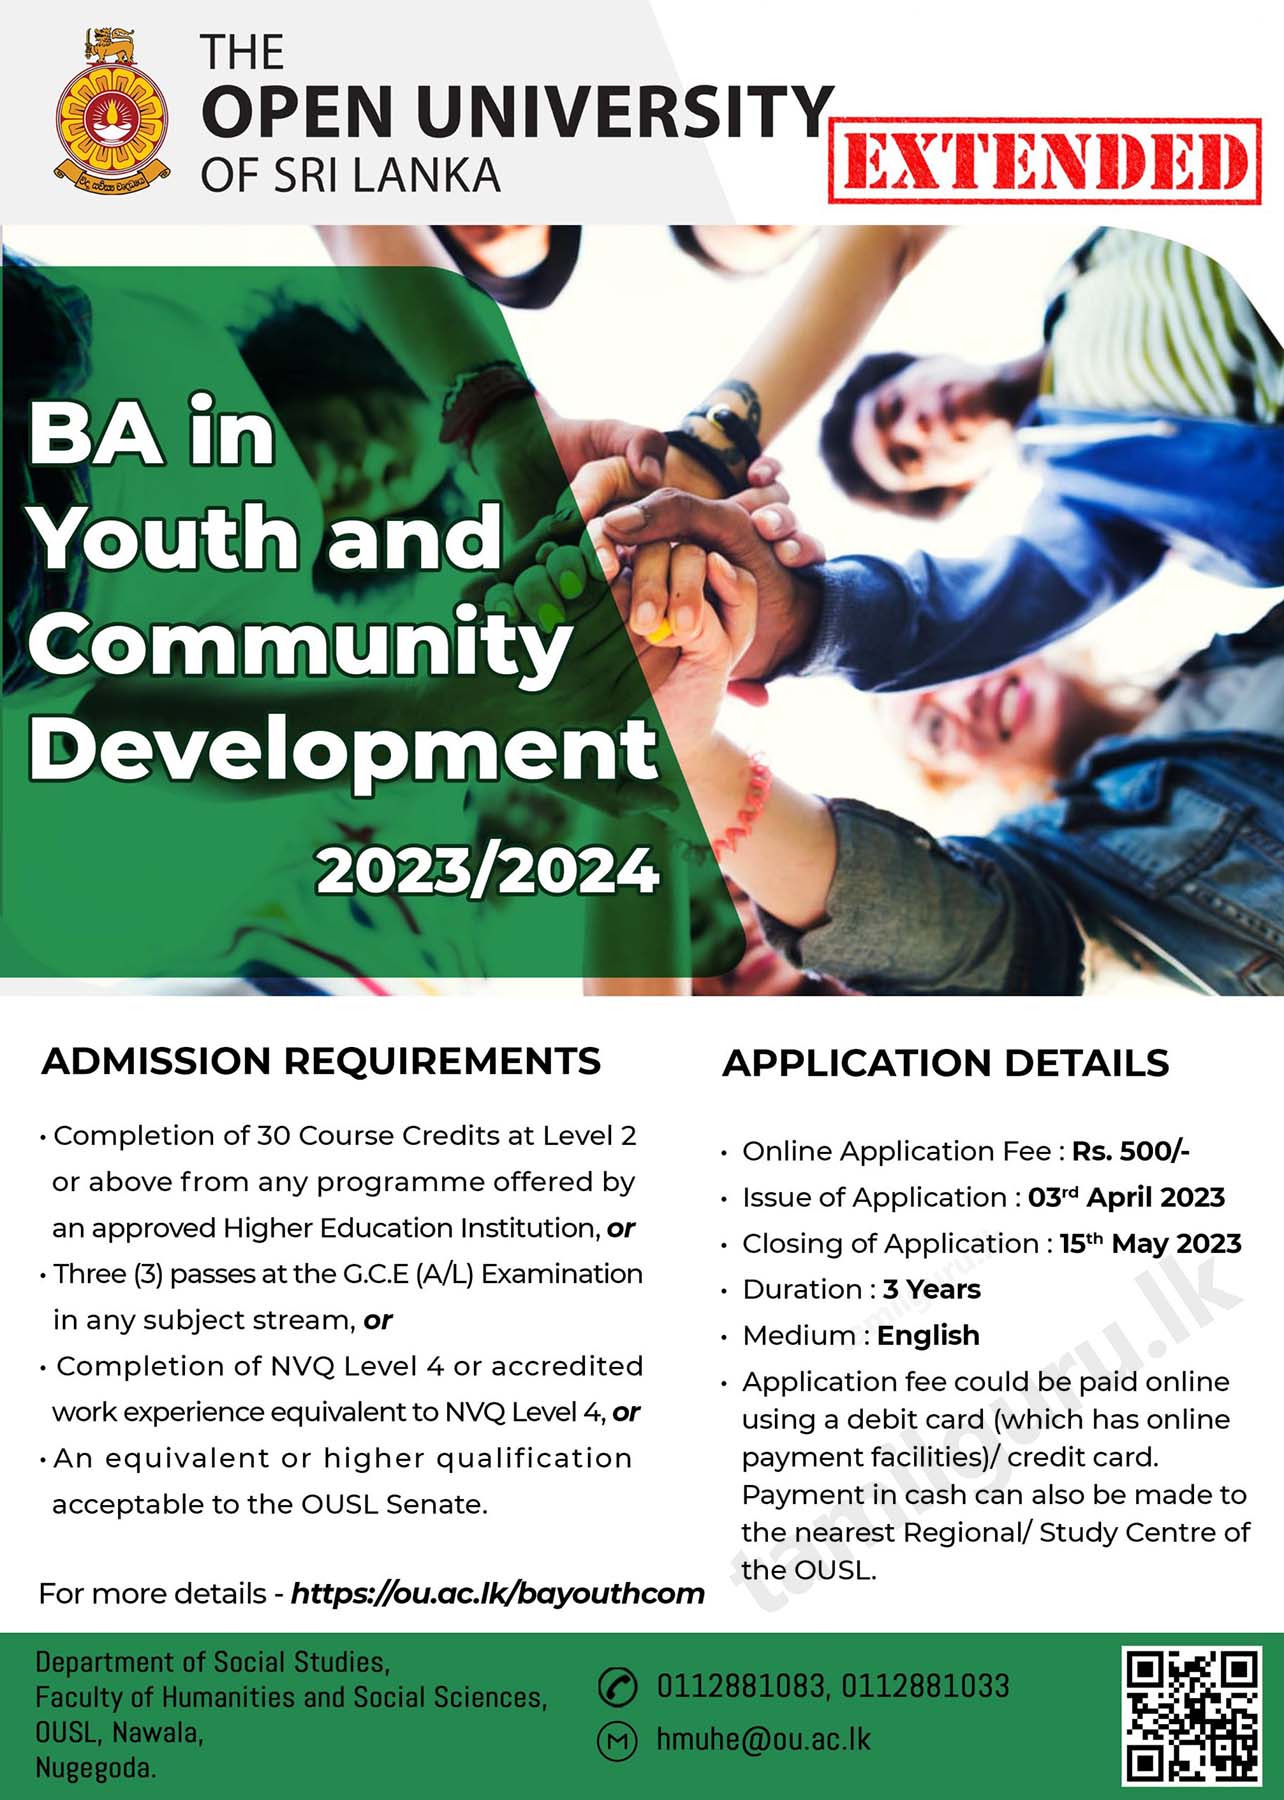 BA in Youth and Community Development Degree Programme 2023 - Open University of Sri Lanka